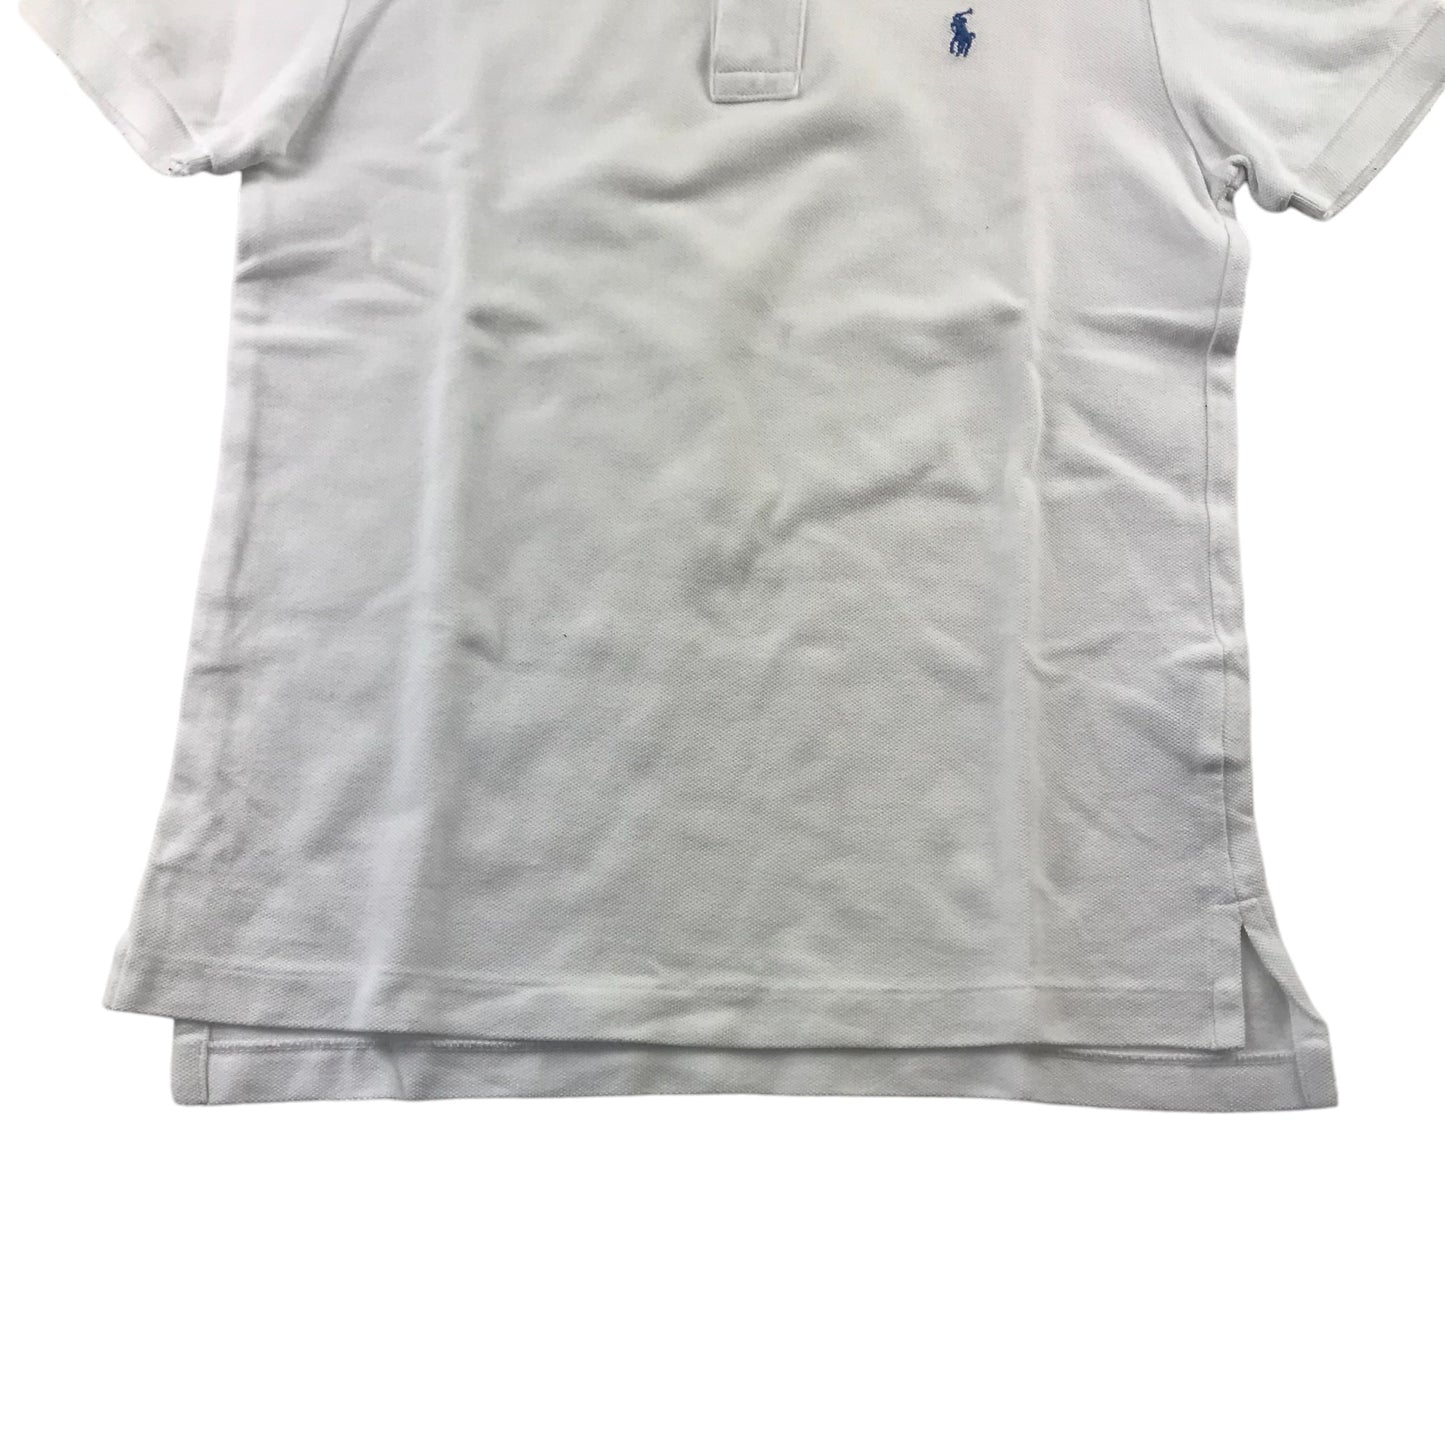 Ralph Lauren Polo Shirt Age 7 White Plain With Blue Logo Cotton